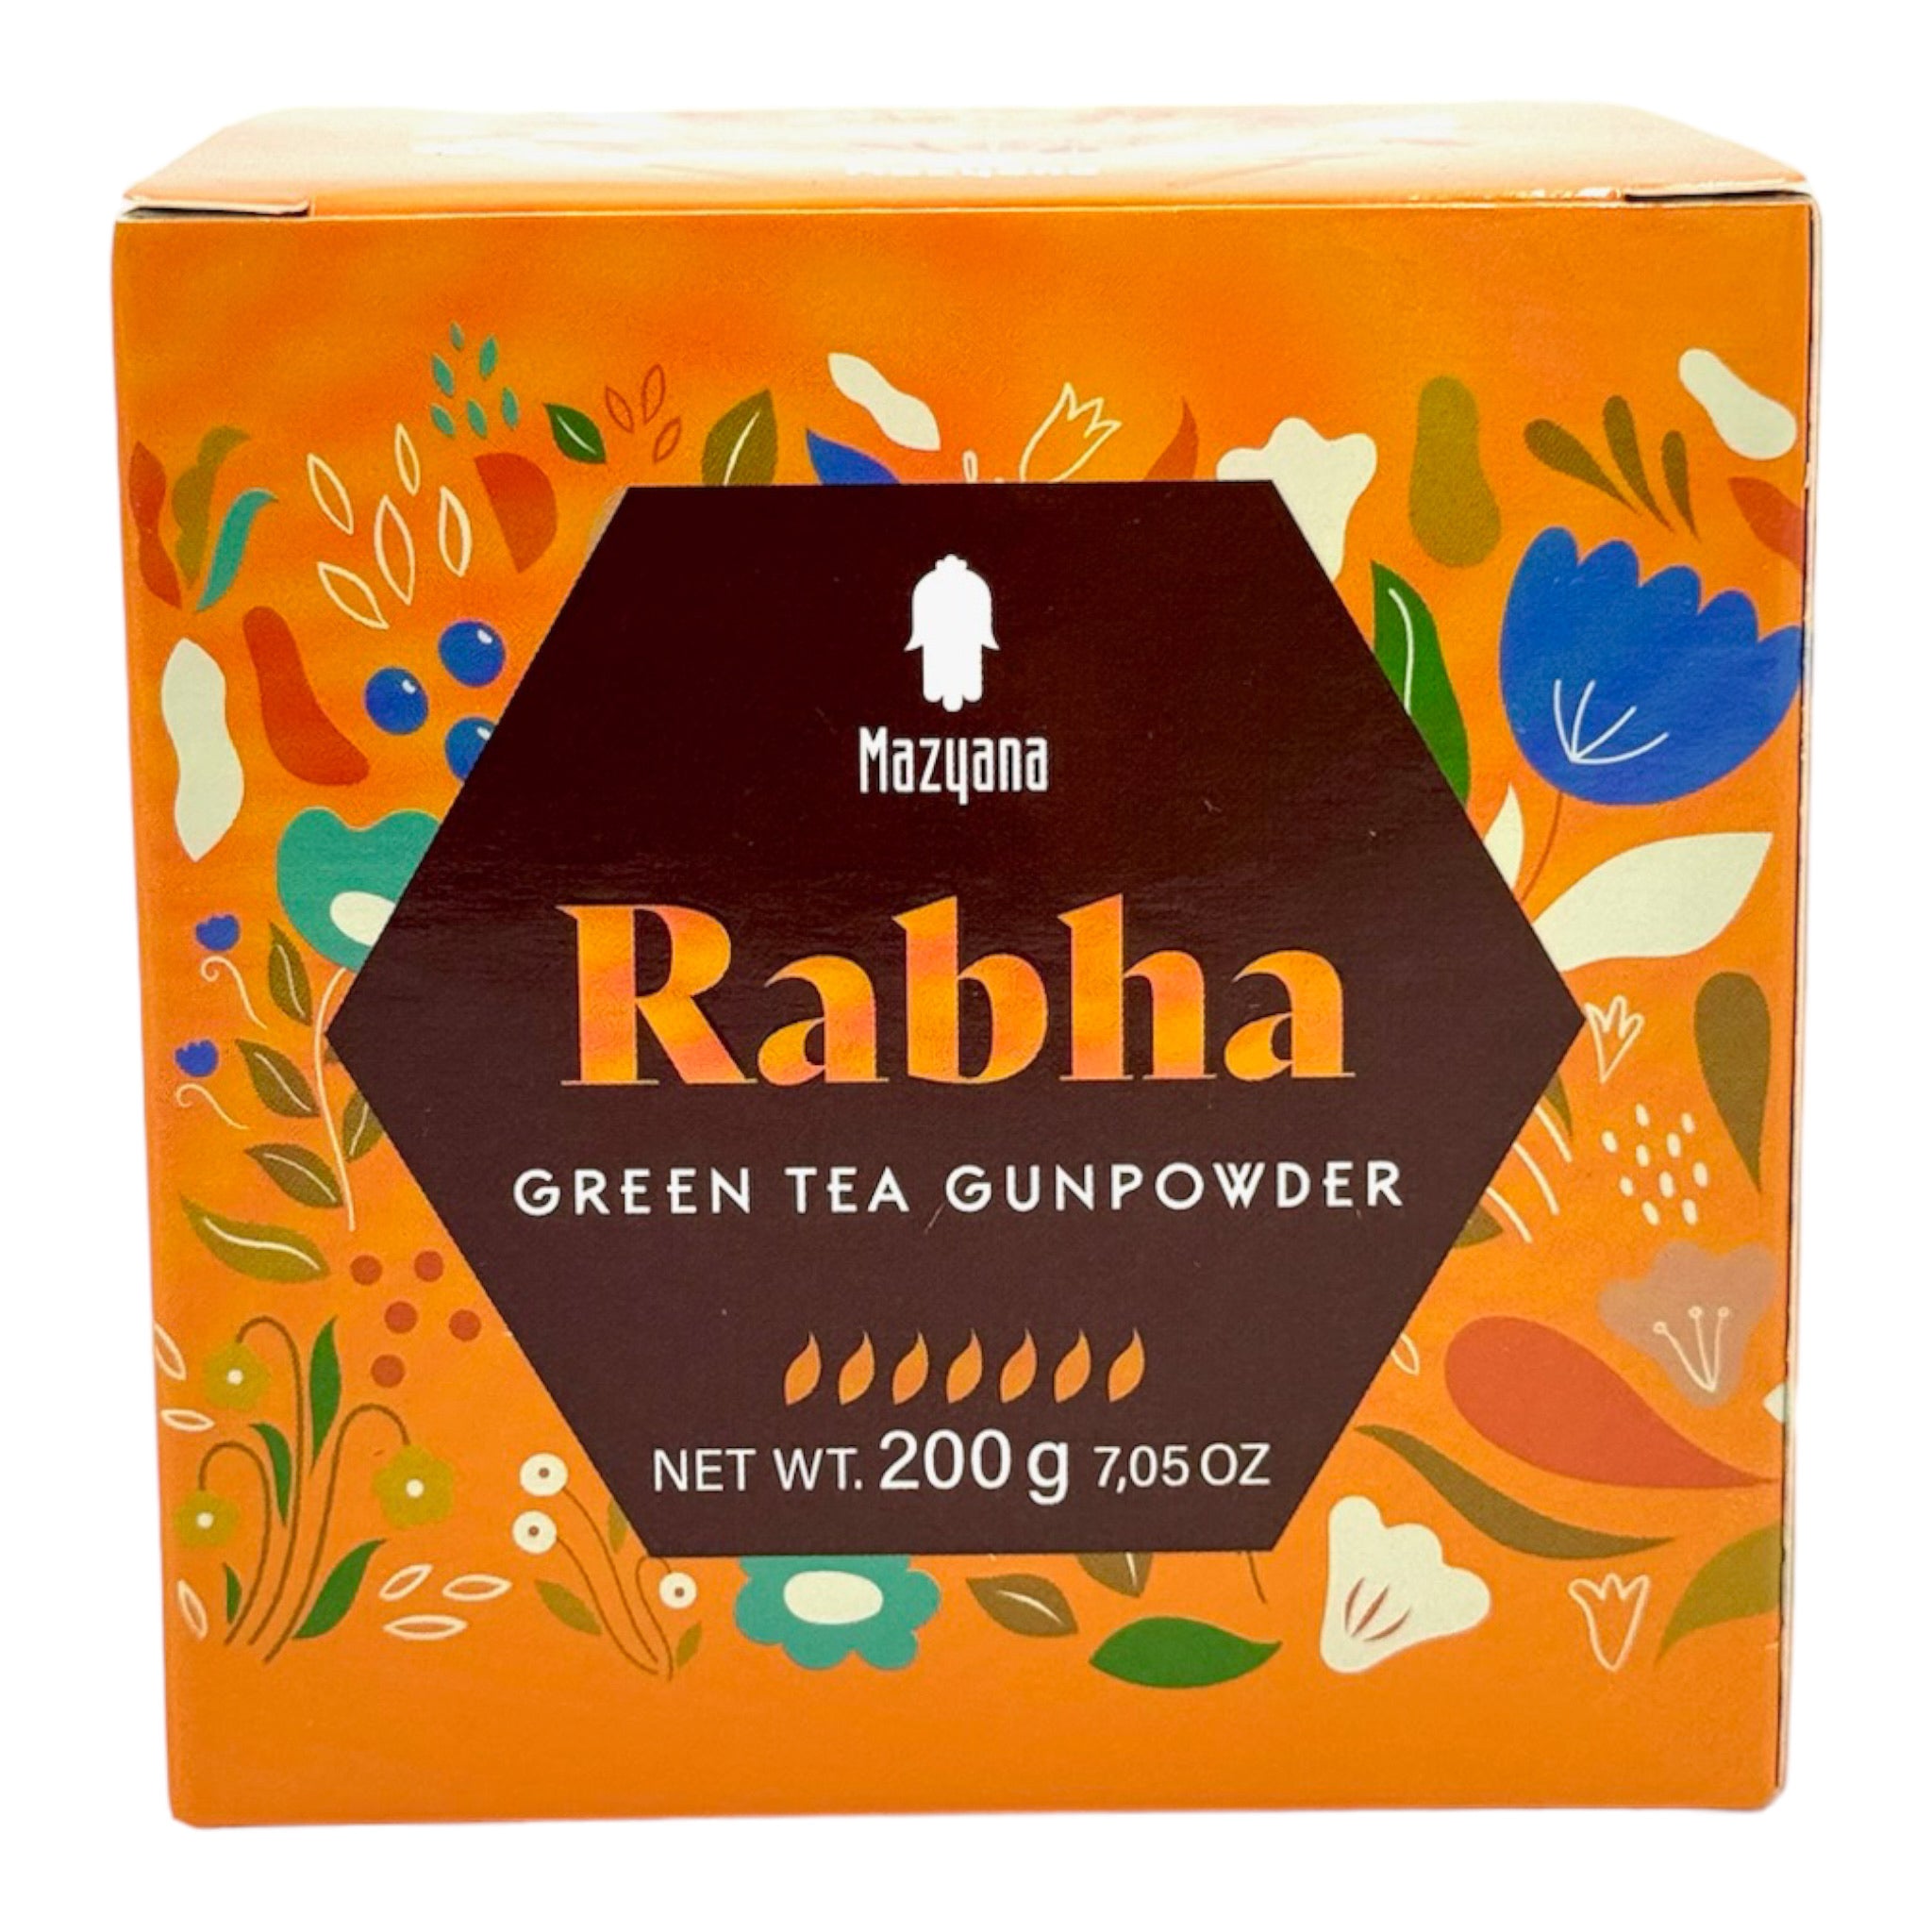 Rabha Gunpowder Green Tea by Mazyana Brand